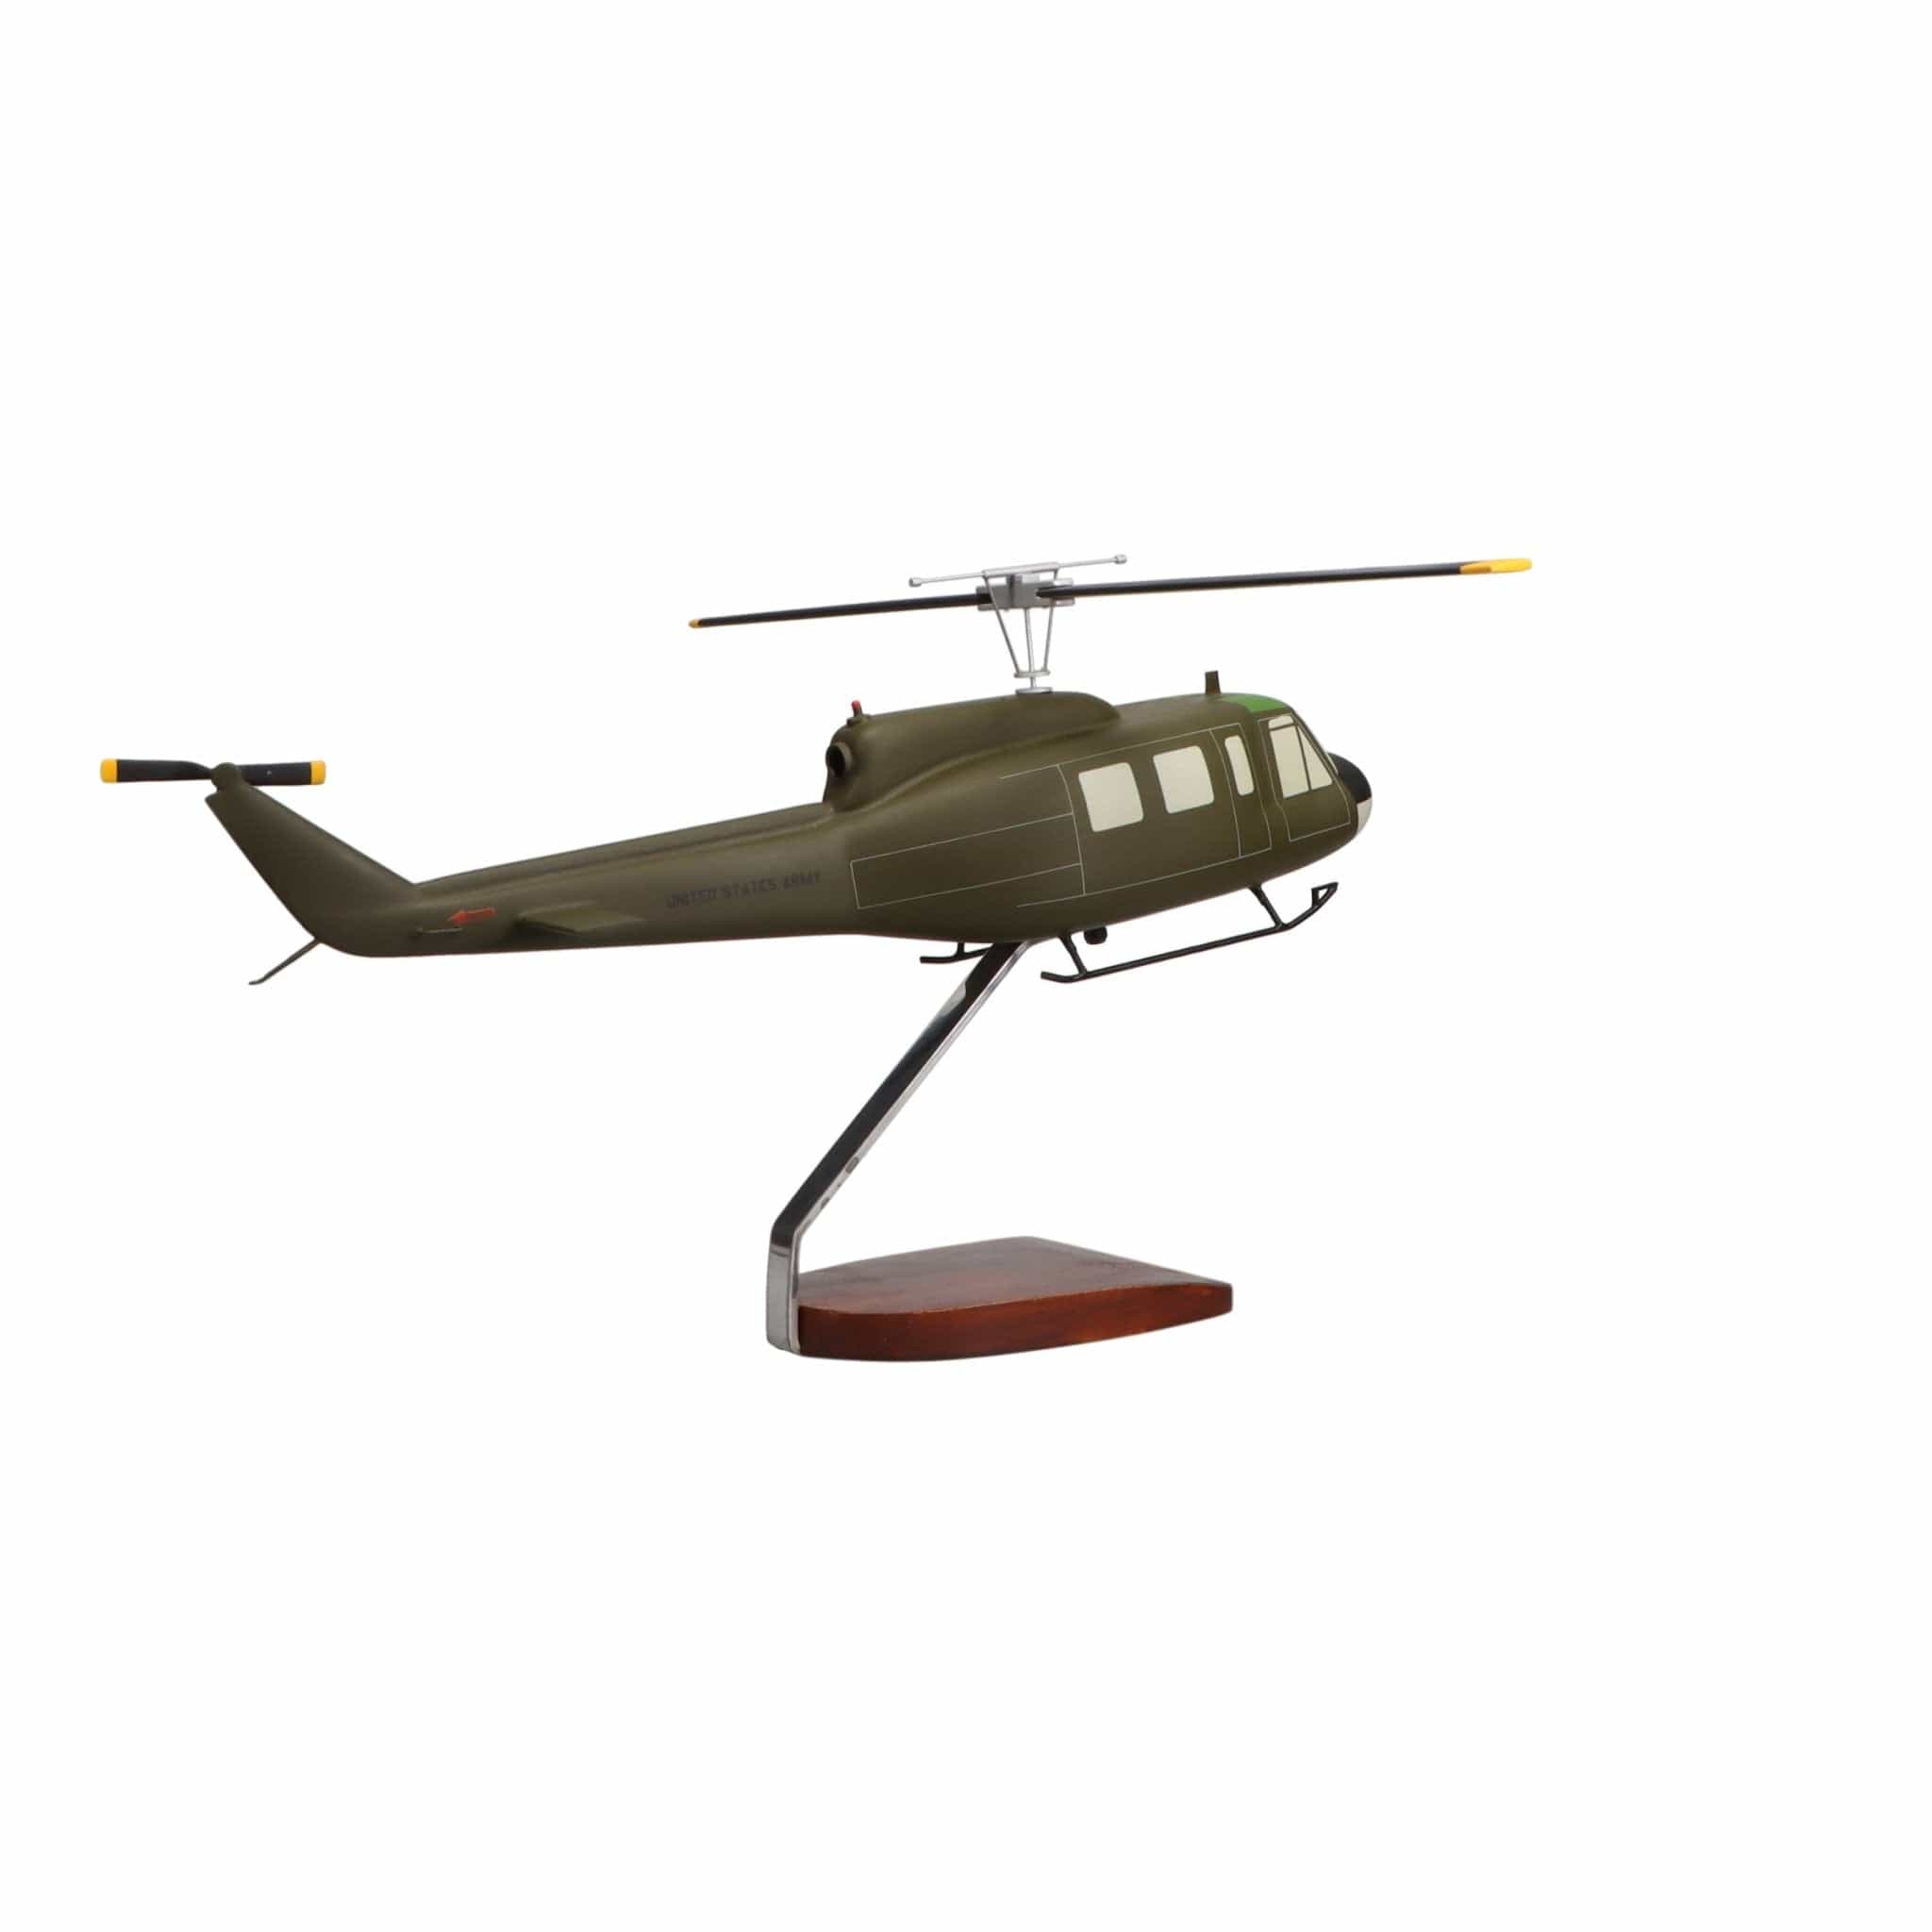 Bell® UH-1 Iroquois (Huey) Large Mahogany Model